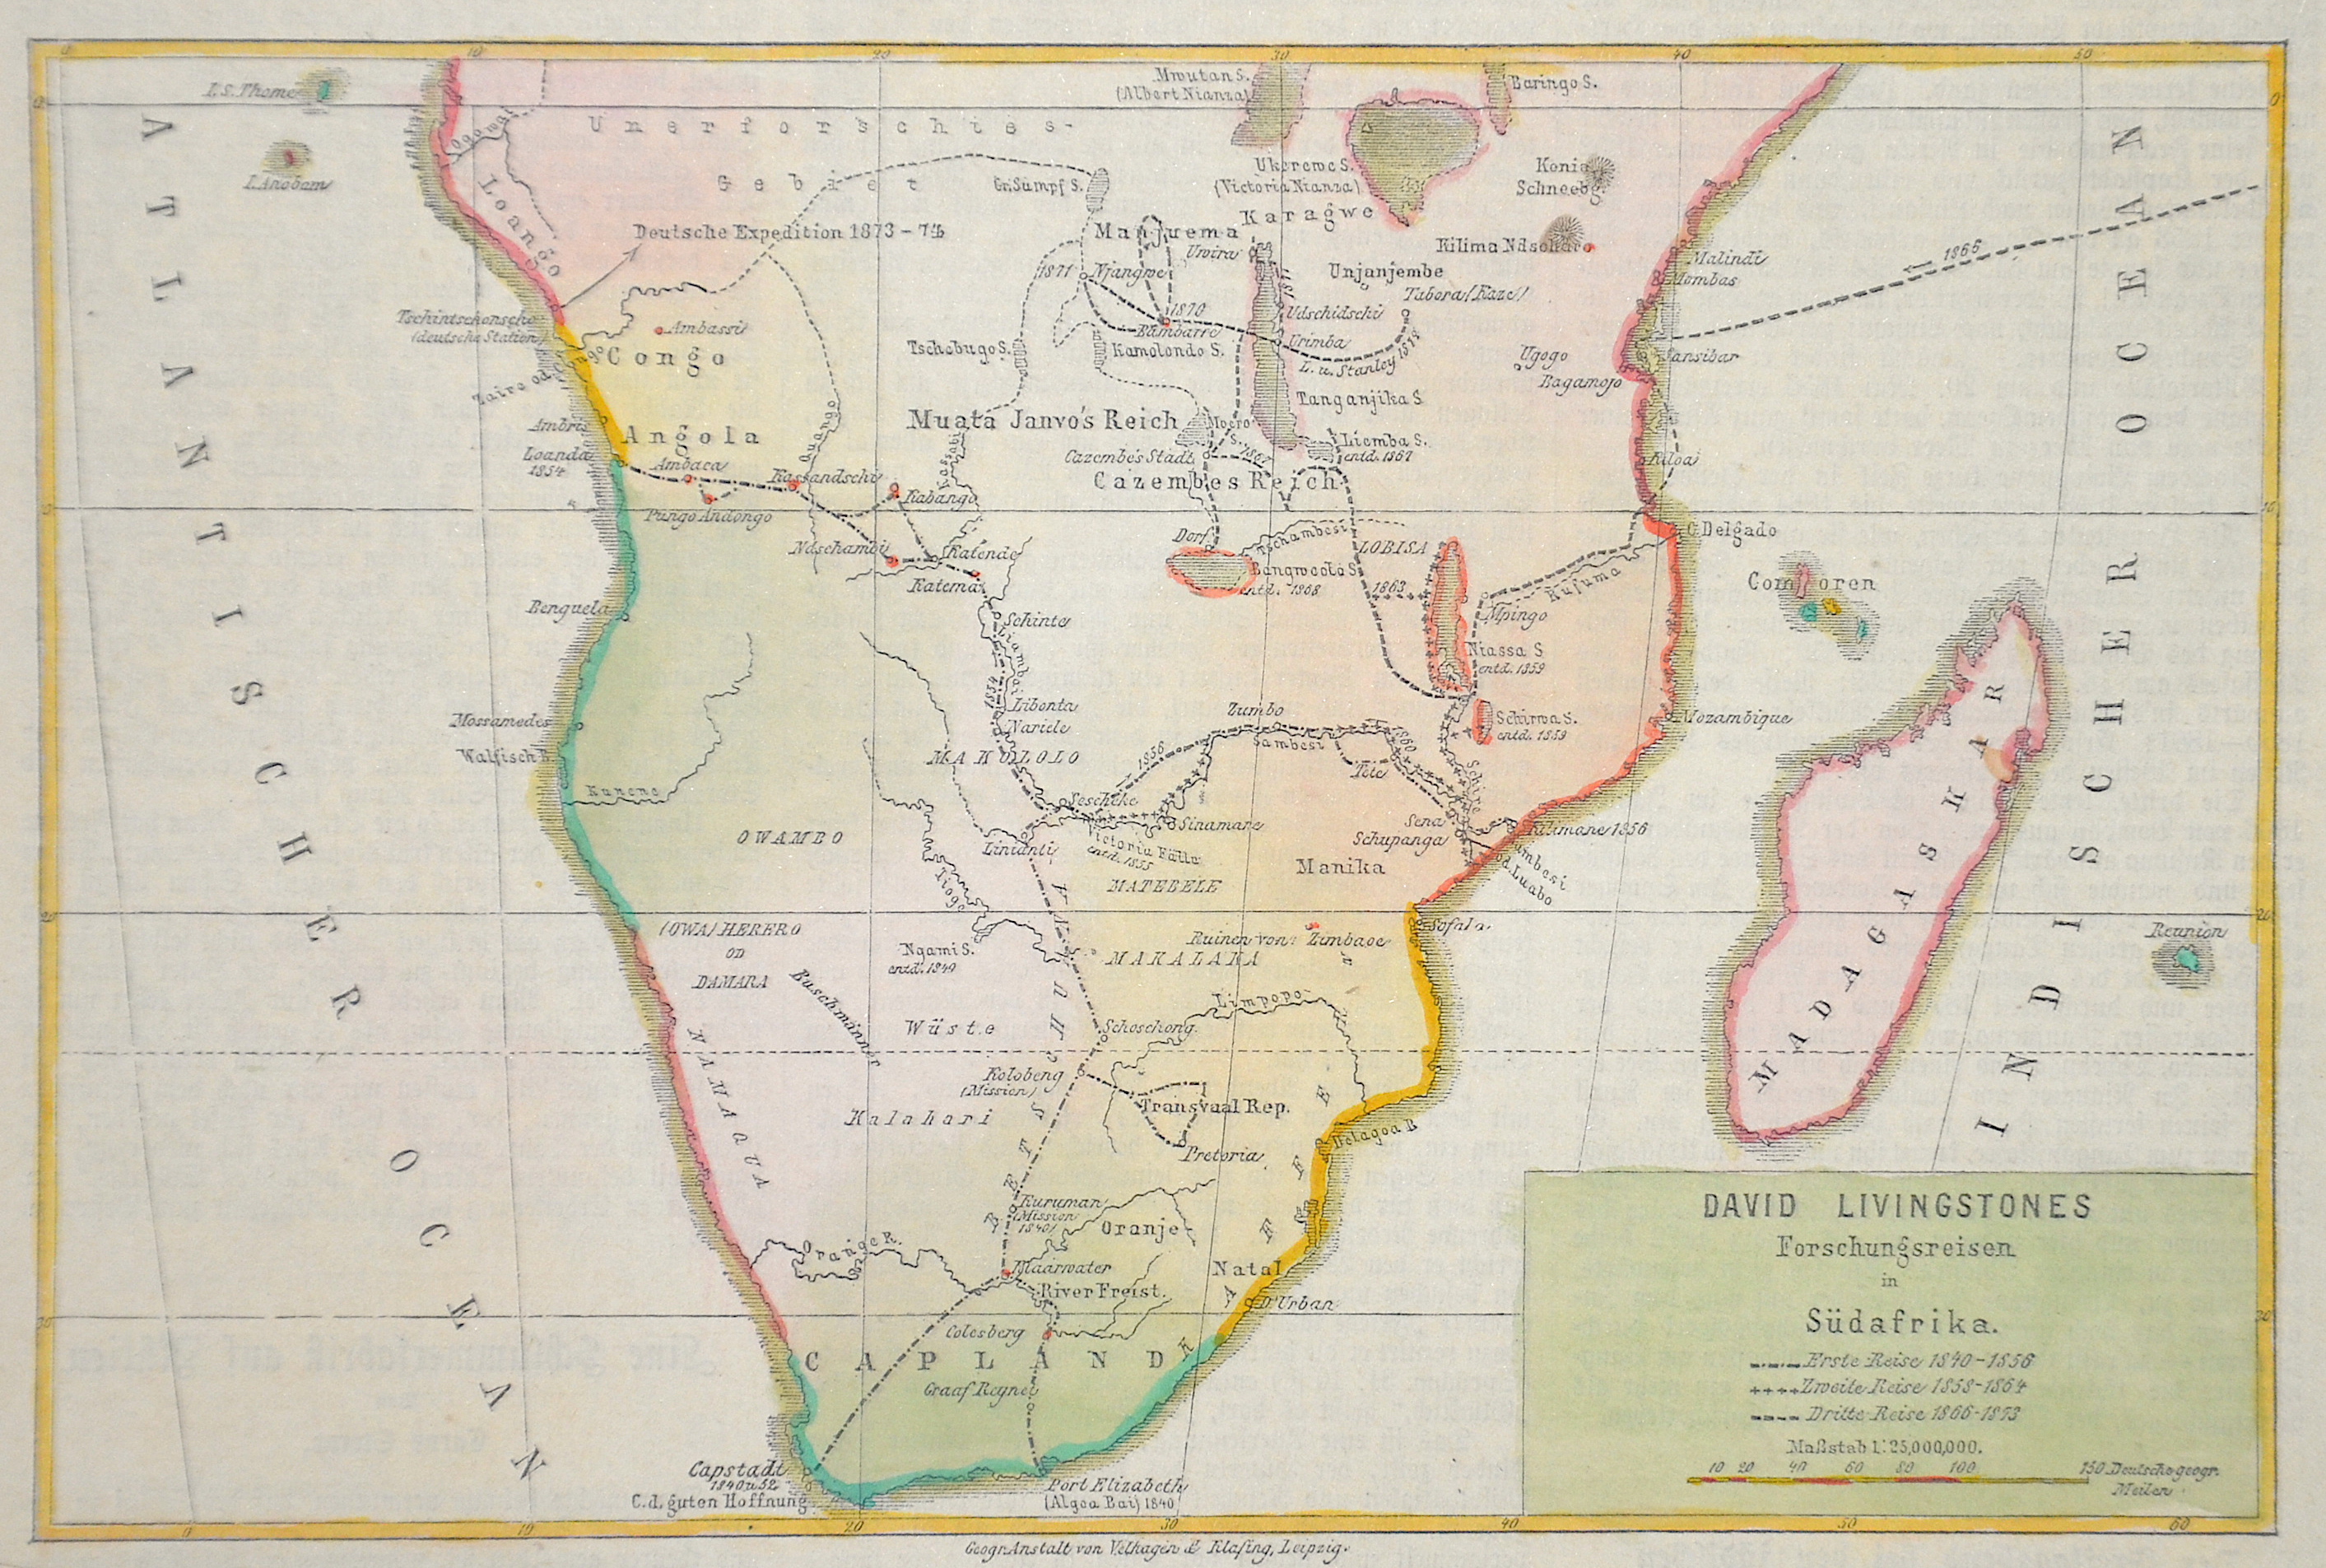 Geogr. Anstalt von Welhager & Klafing  David Livingstones Forschungsreisen in Südafrika.